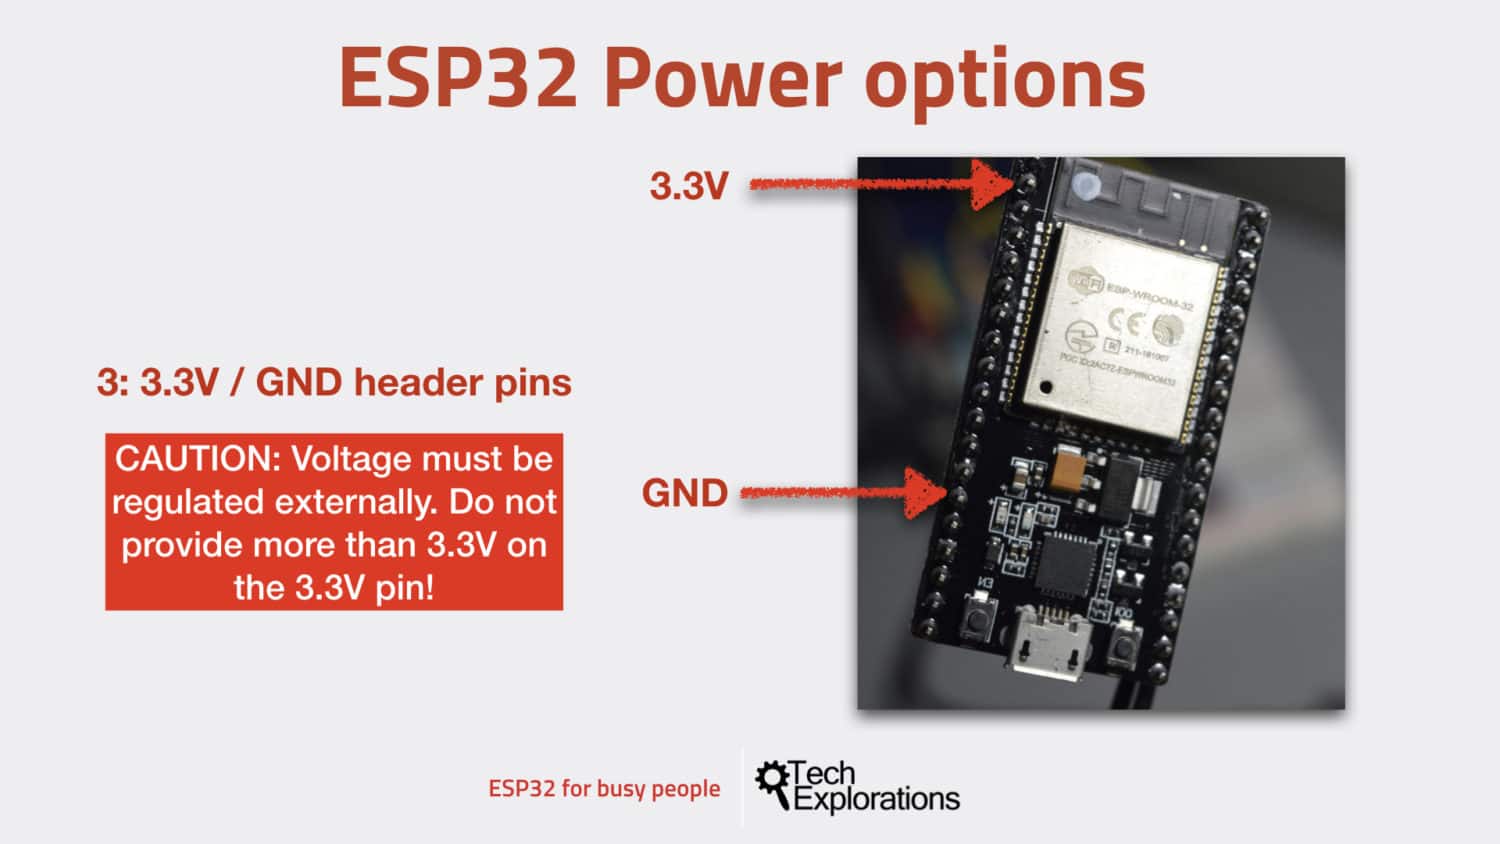 Getting Started with Espressif's ESP32-C3-DevKITM-1 on Arduino IDE